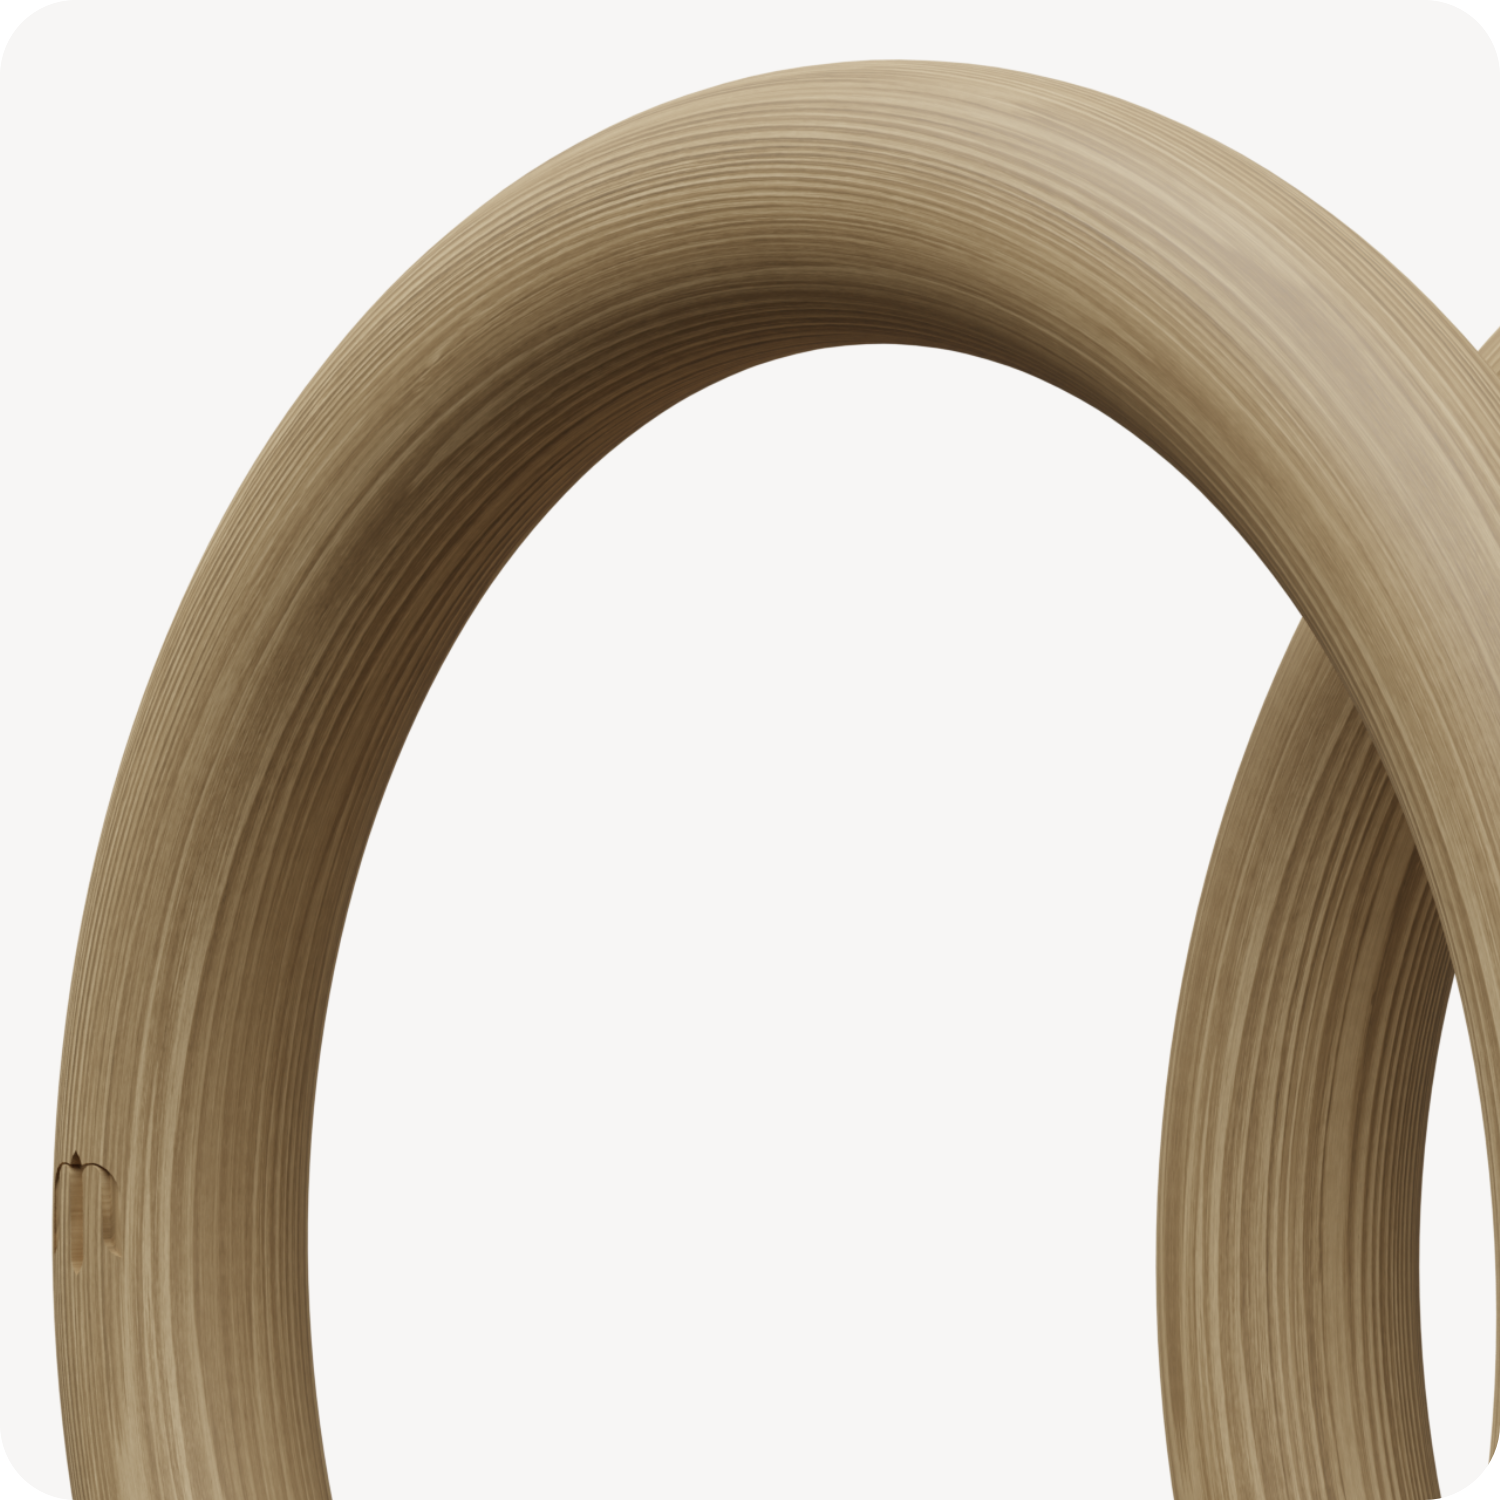 Wooden Gymnastic Rings